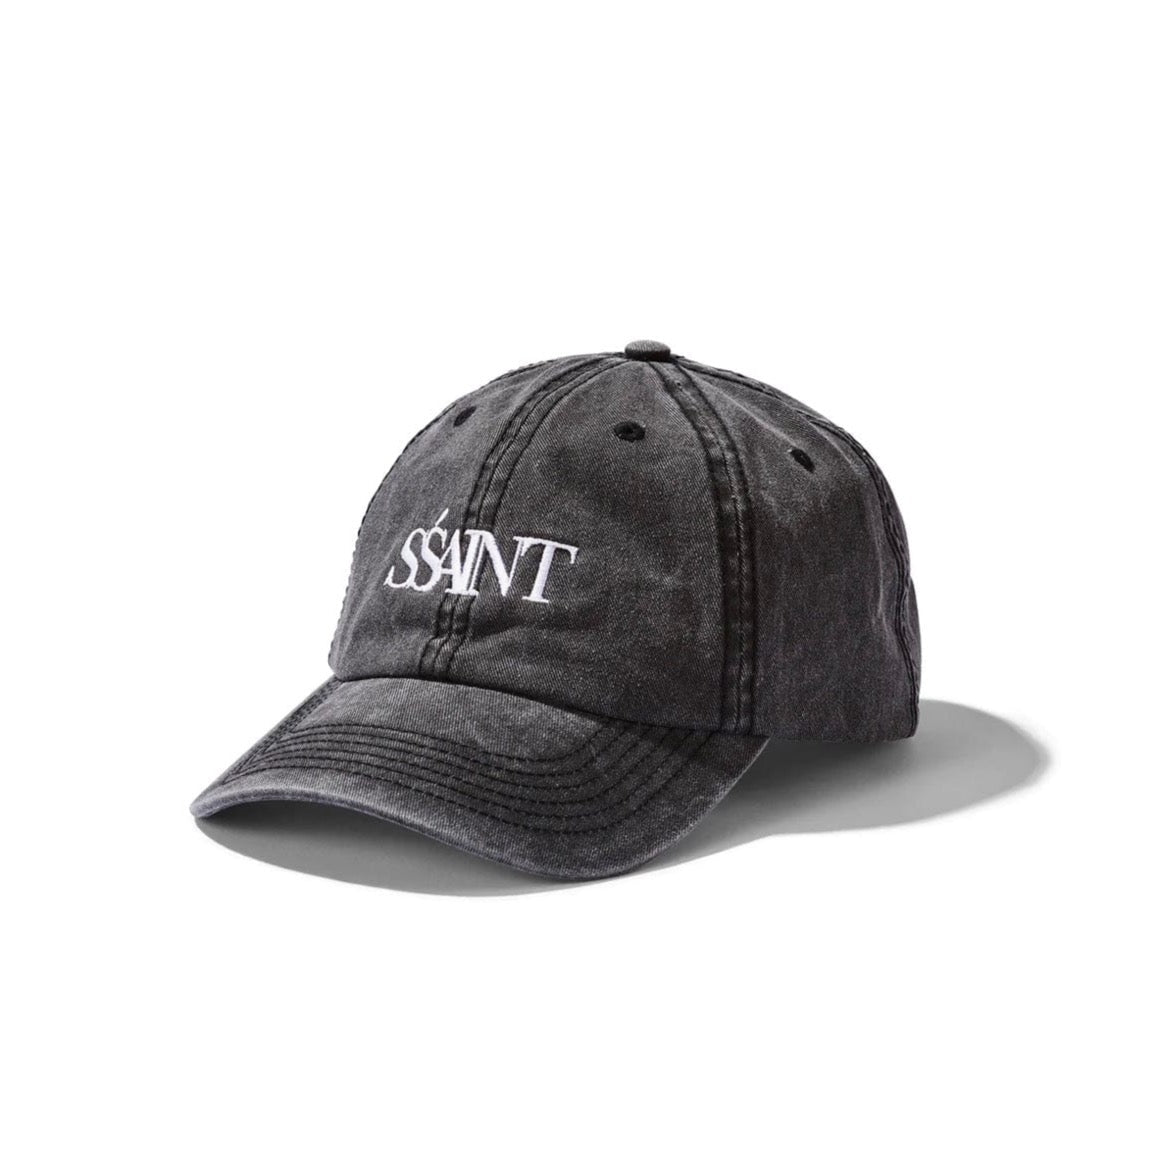 Limited Edition SSAINT Cap Black by Ssaint